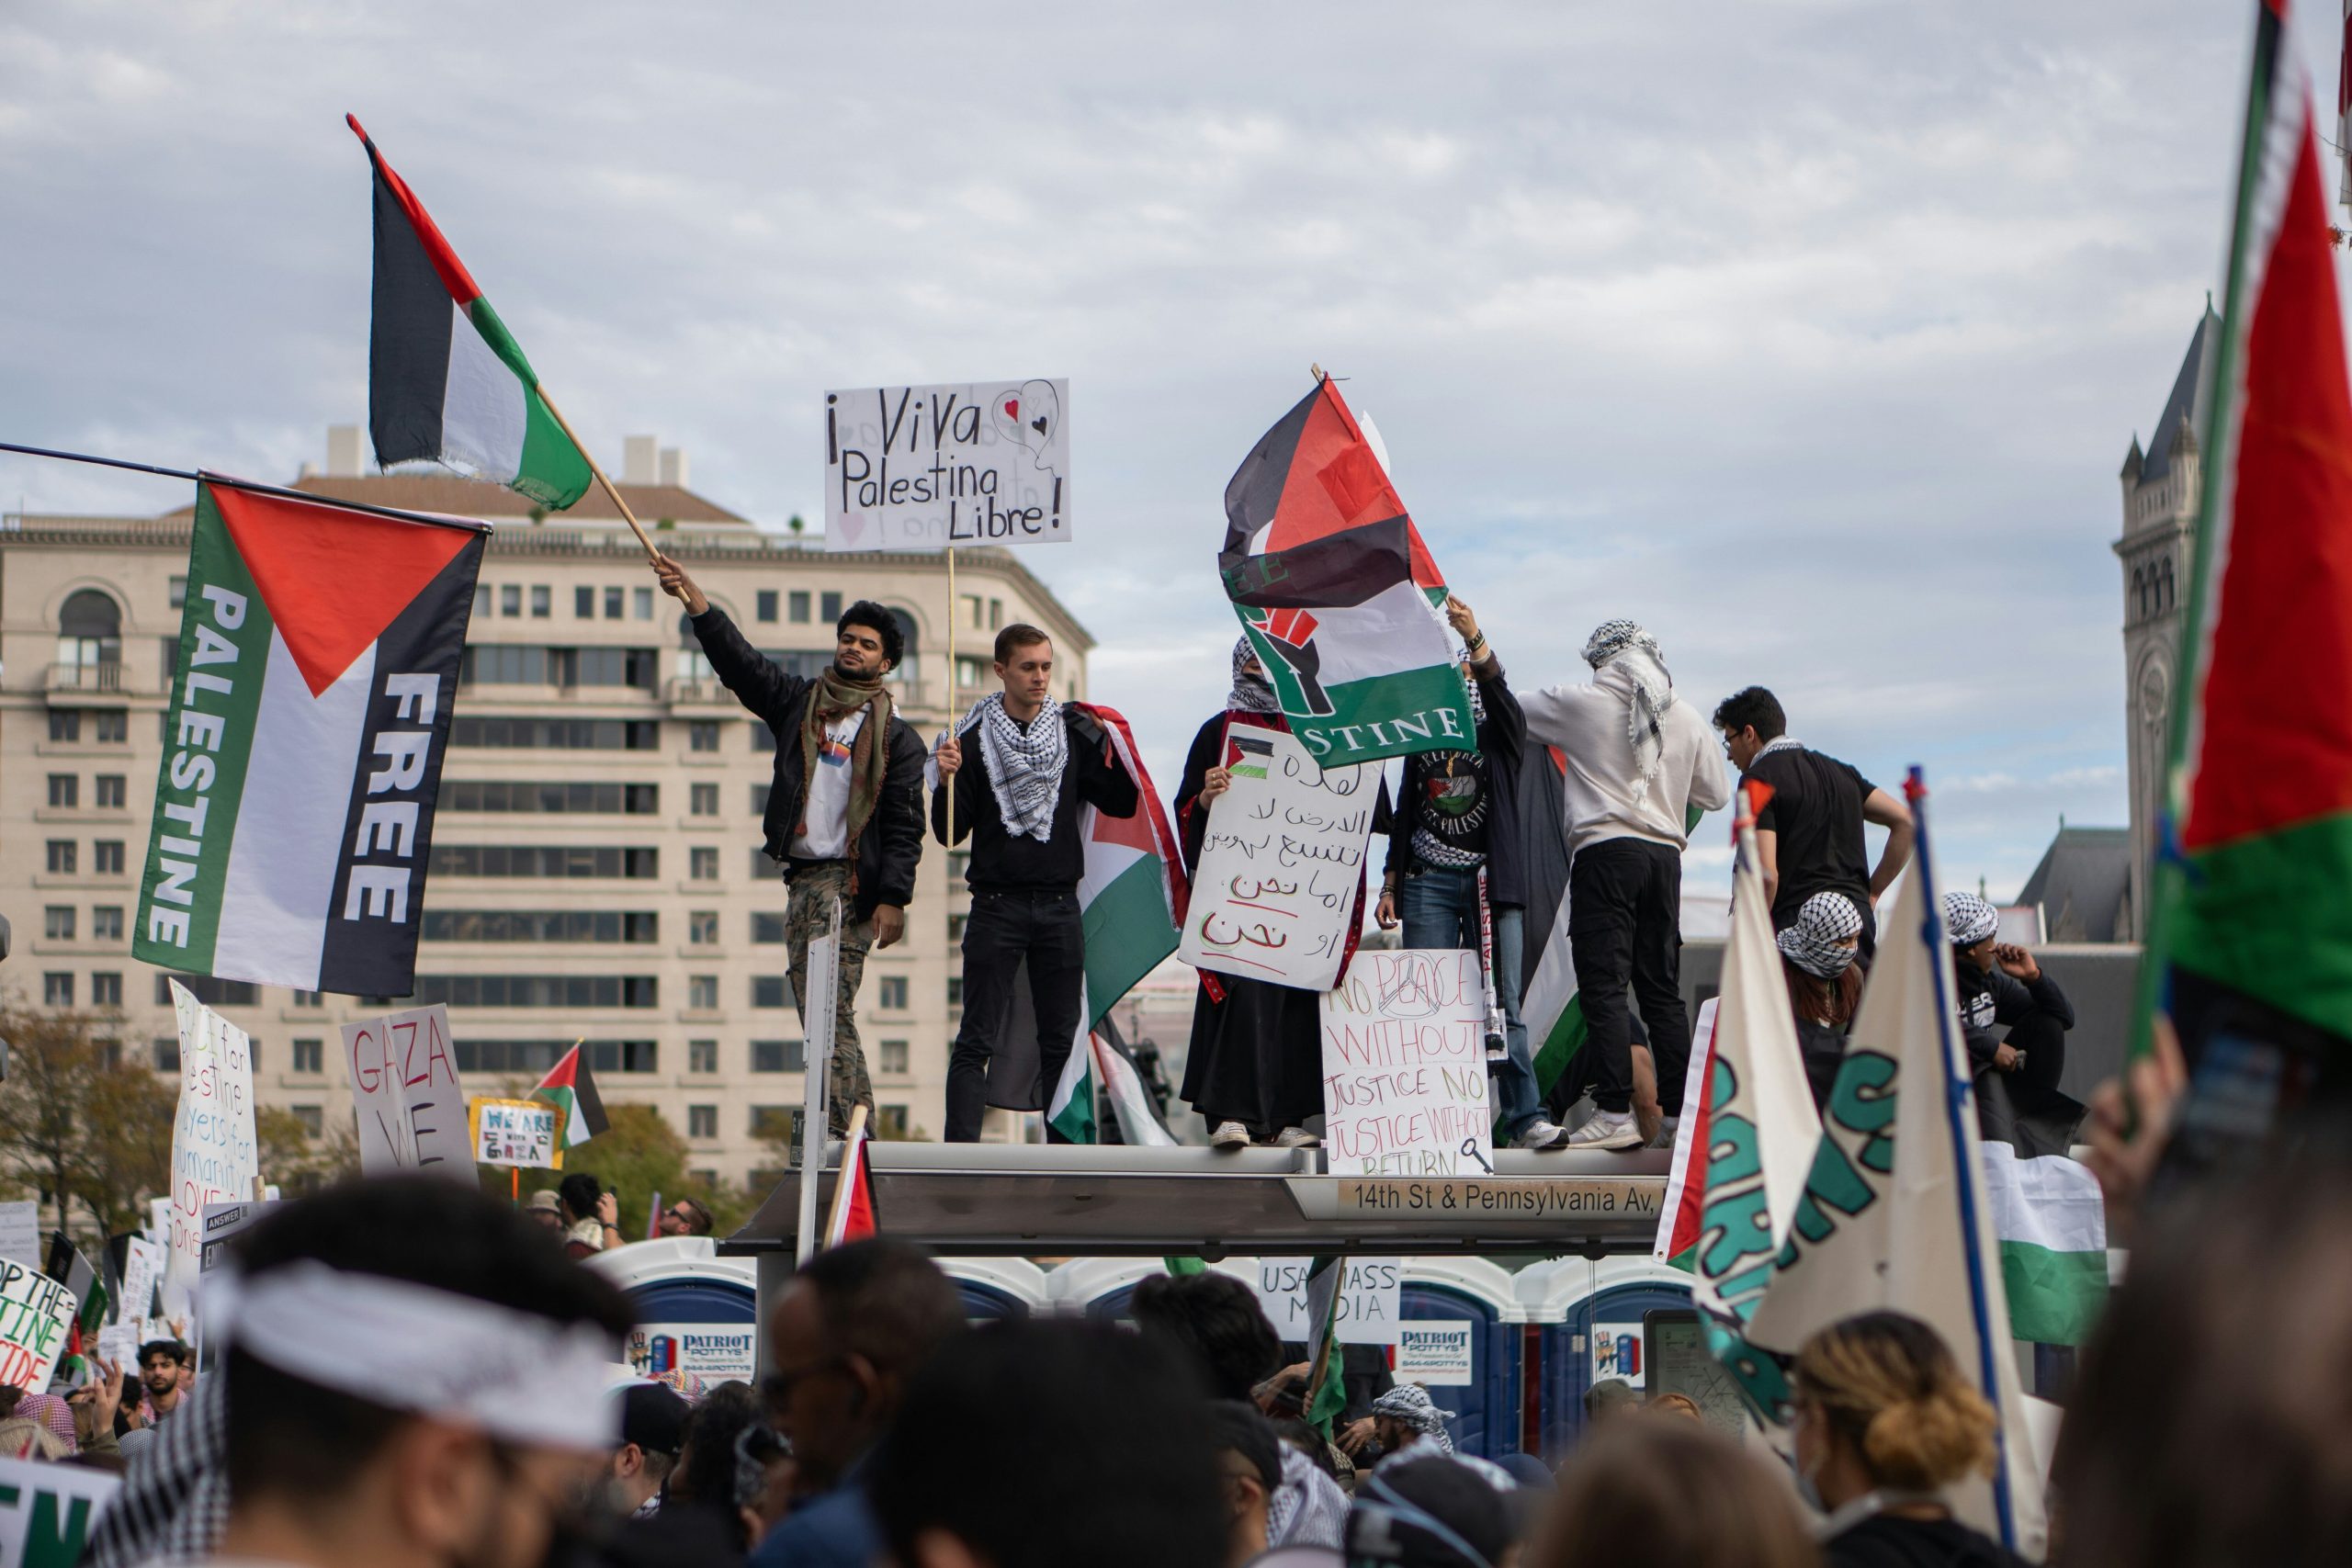 A pro-Palestine protest